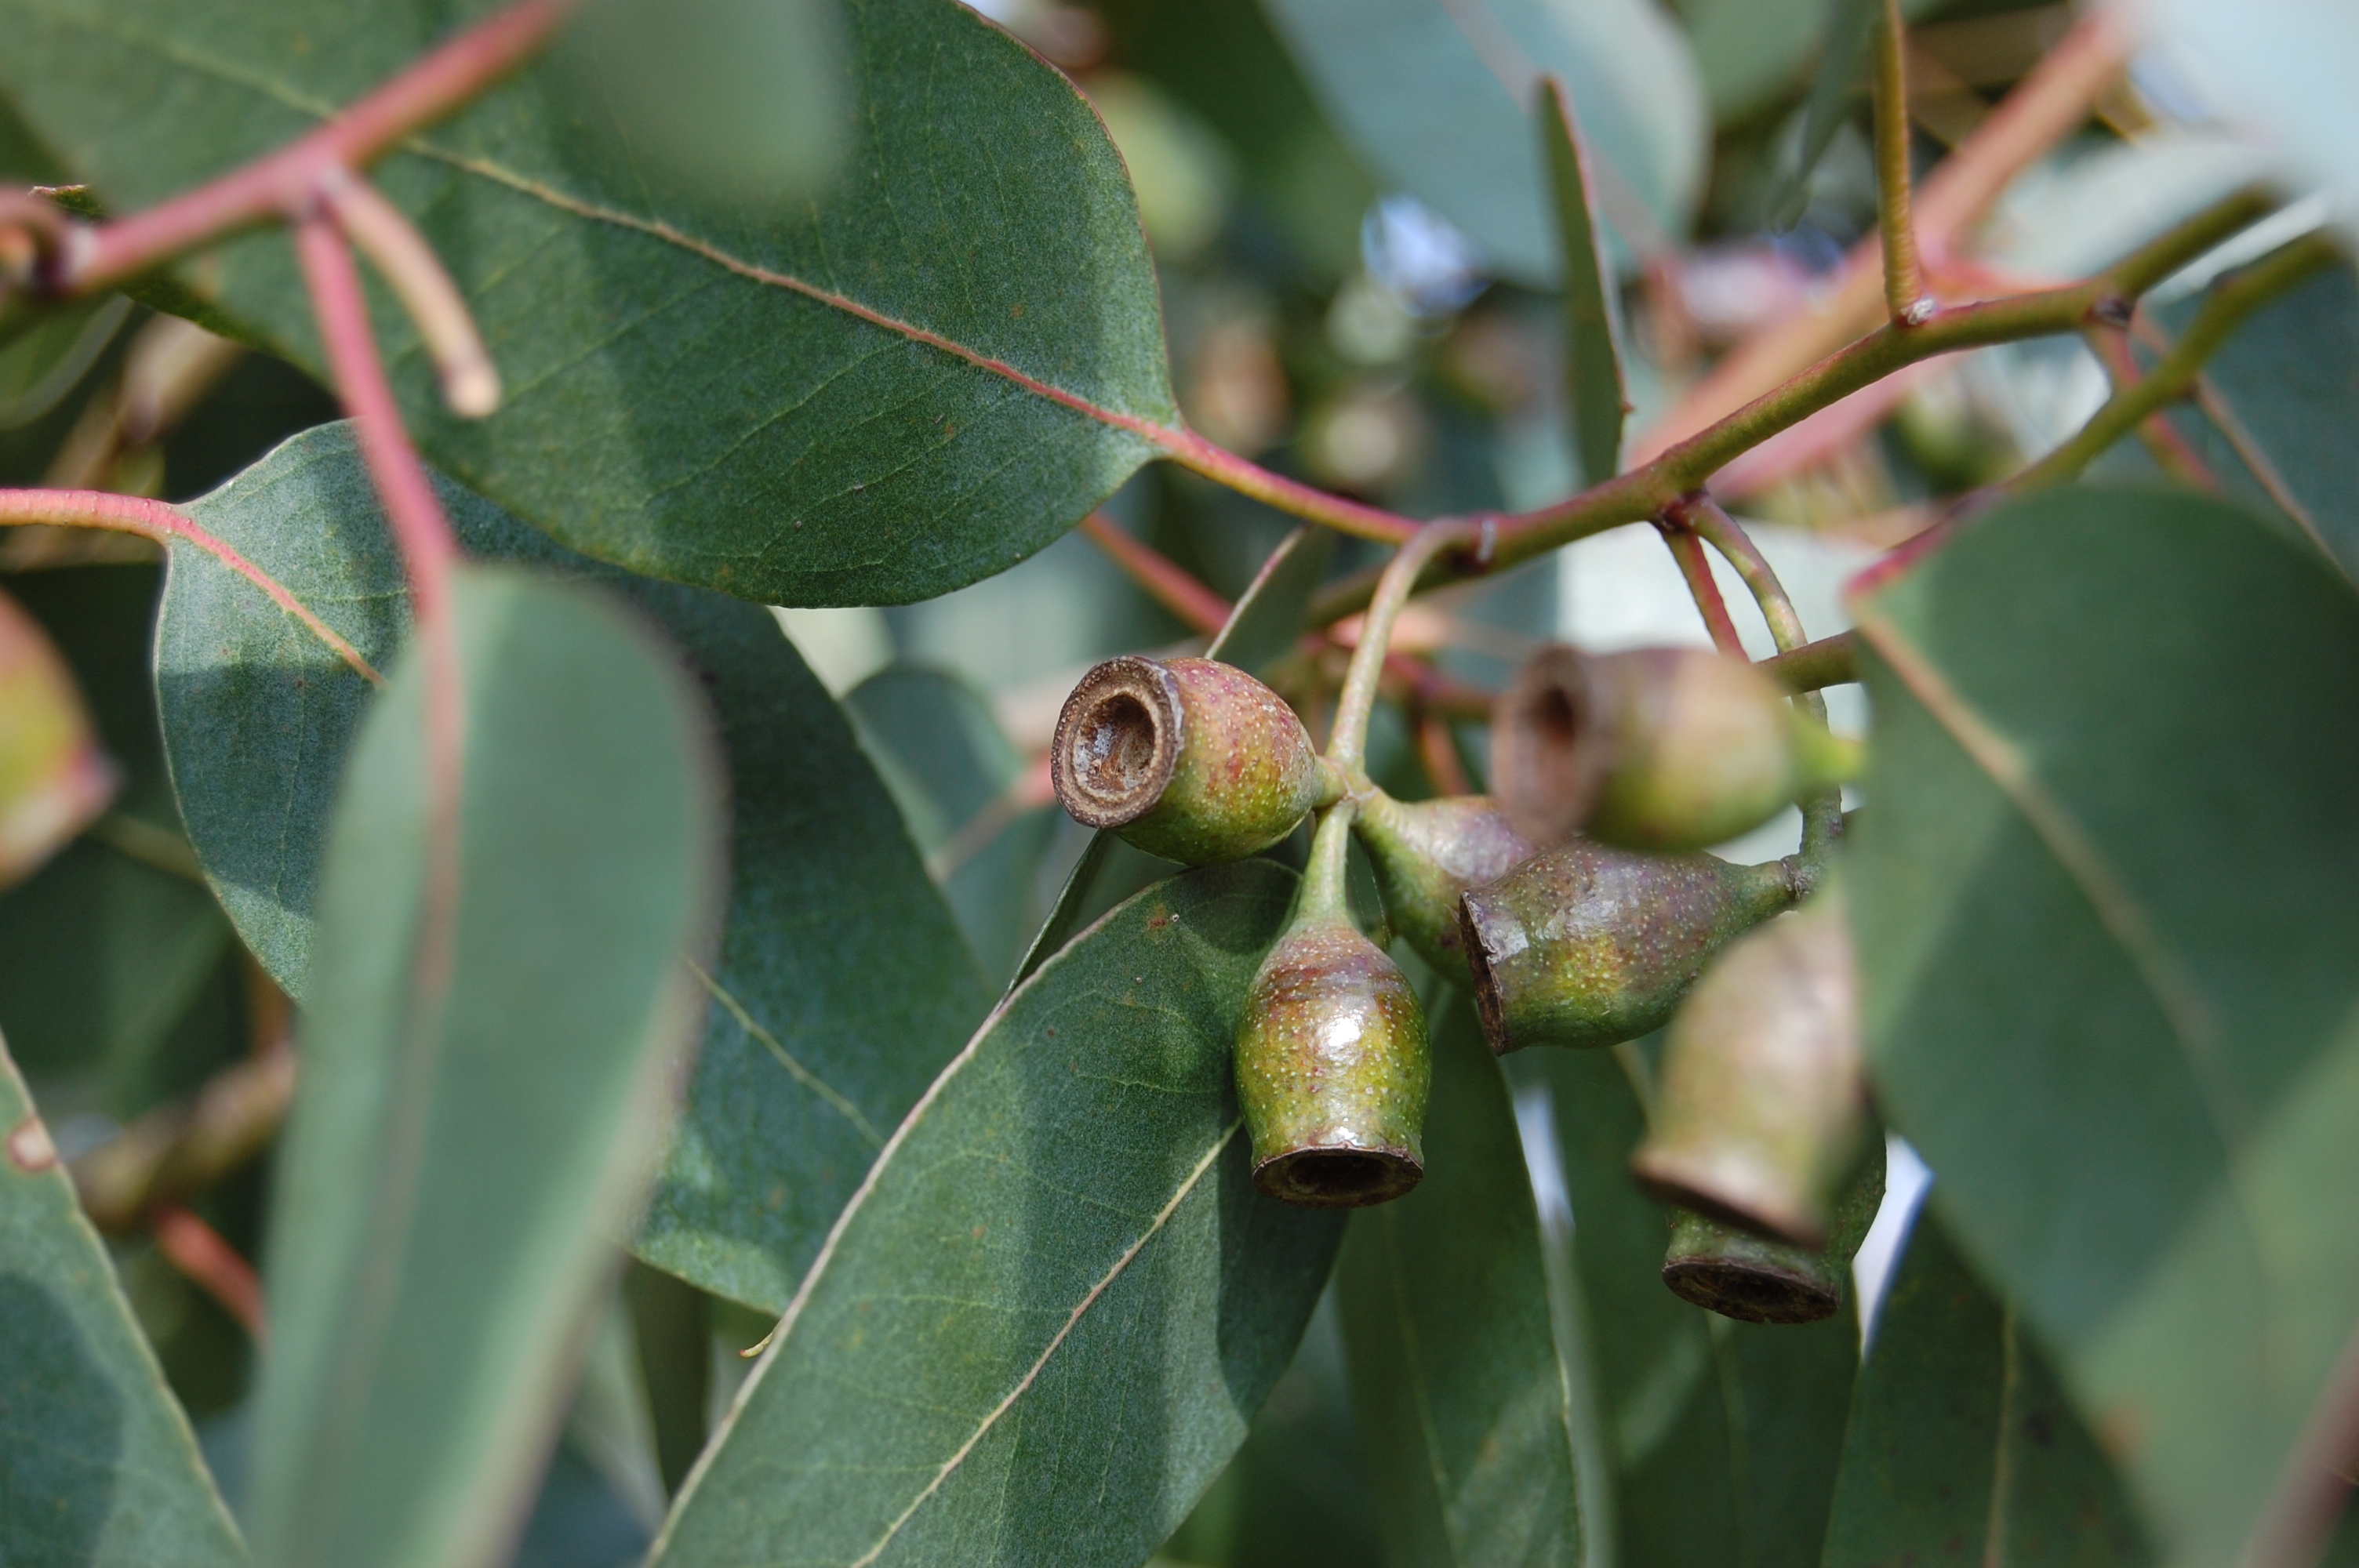 An analysis of the tree eucalyptus